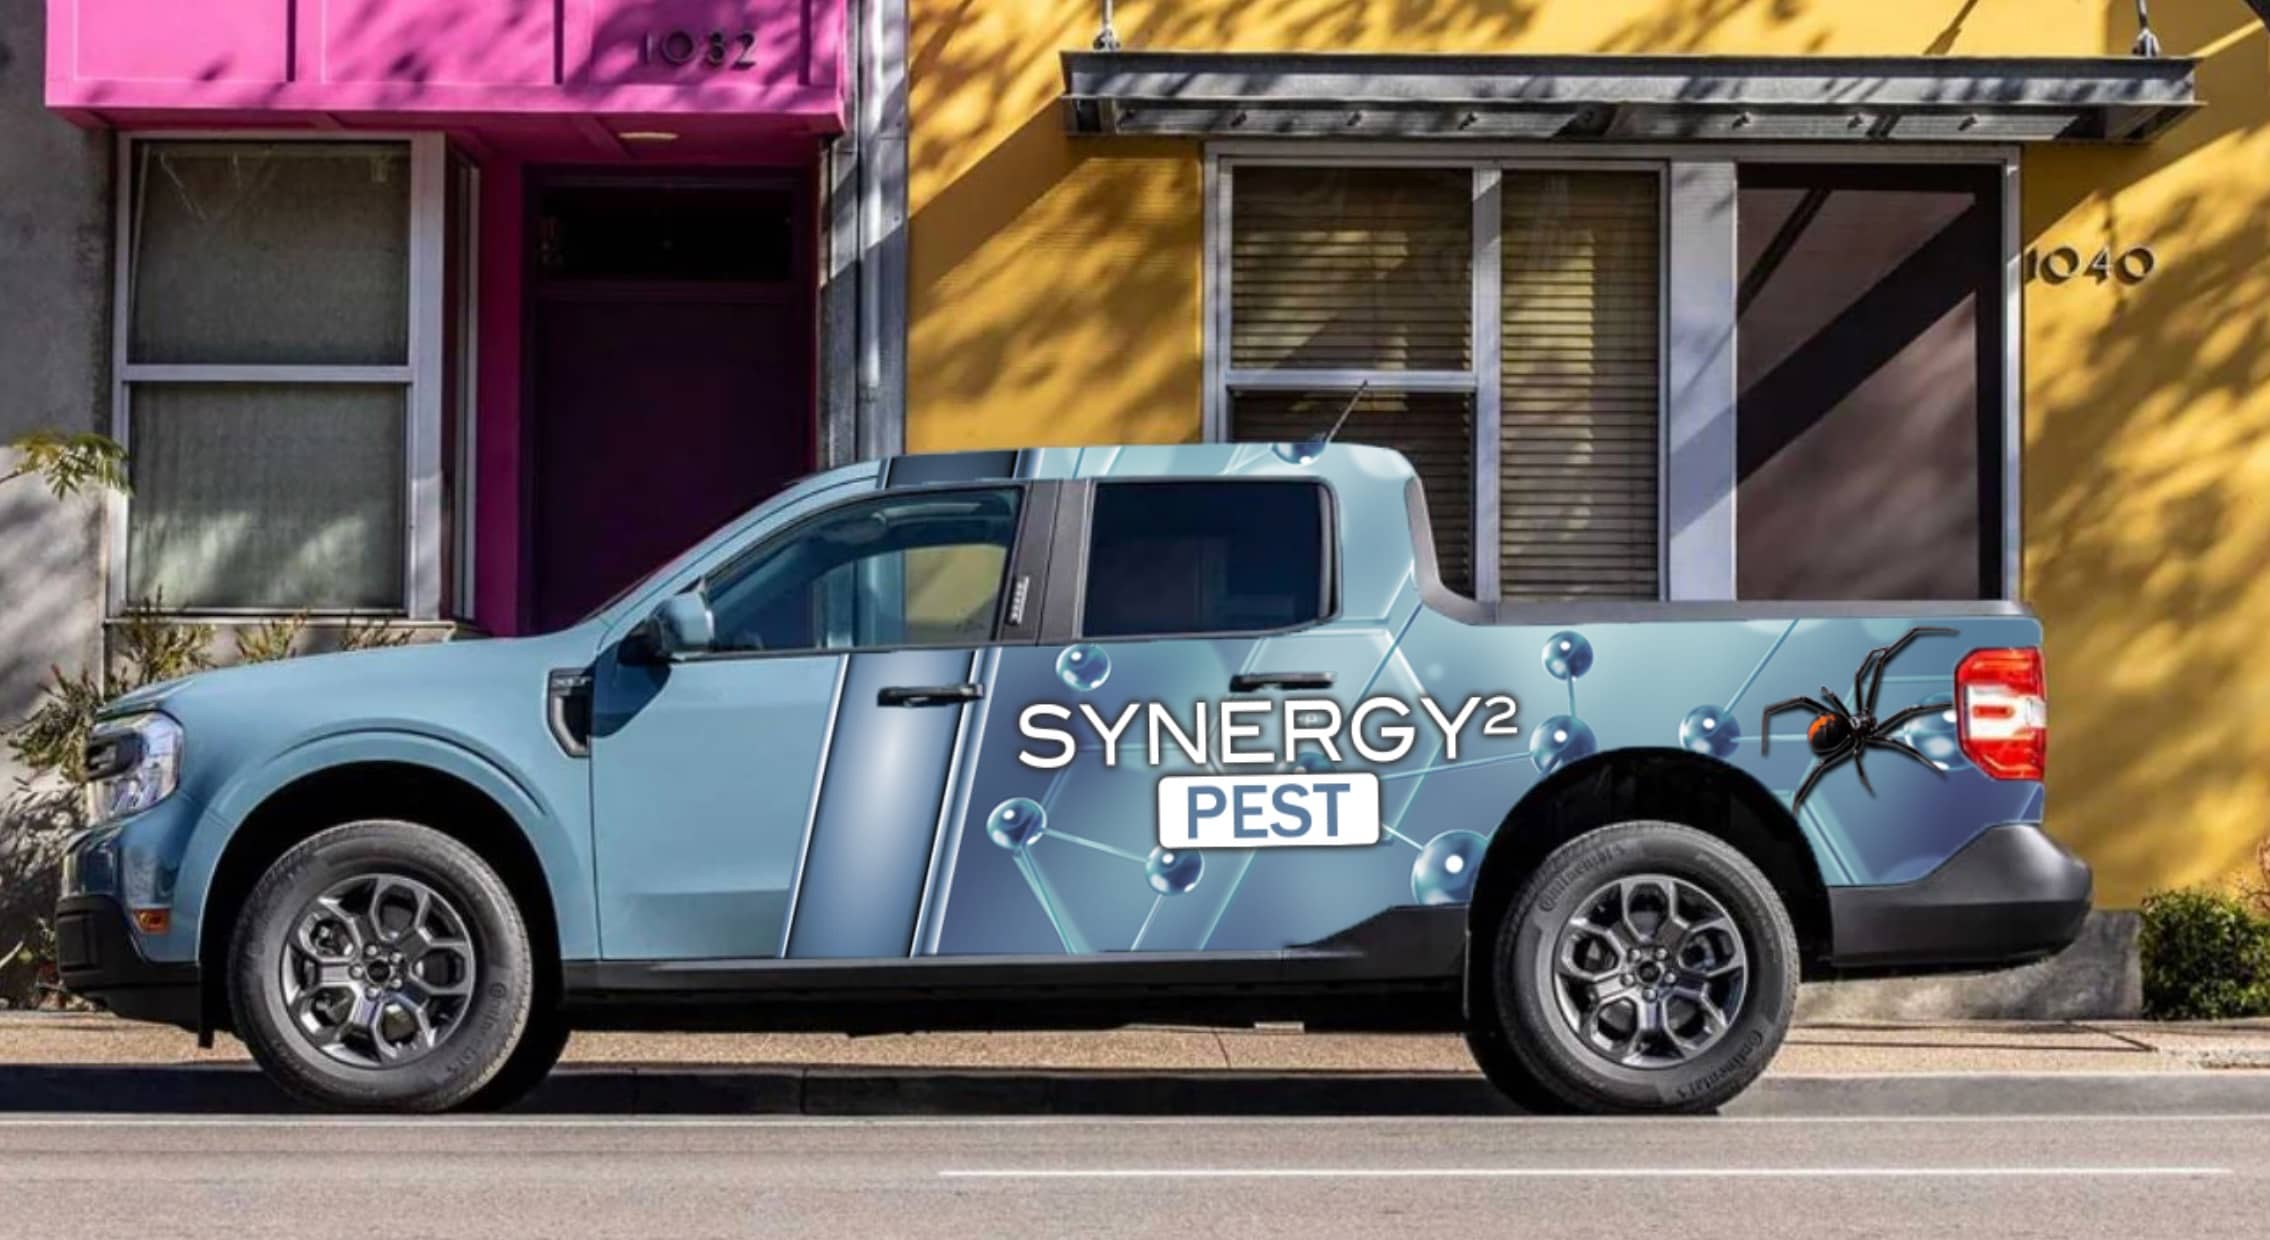 Synergy² - Madison, MS, US, pest control